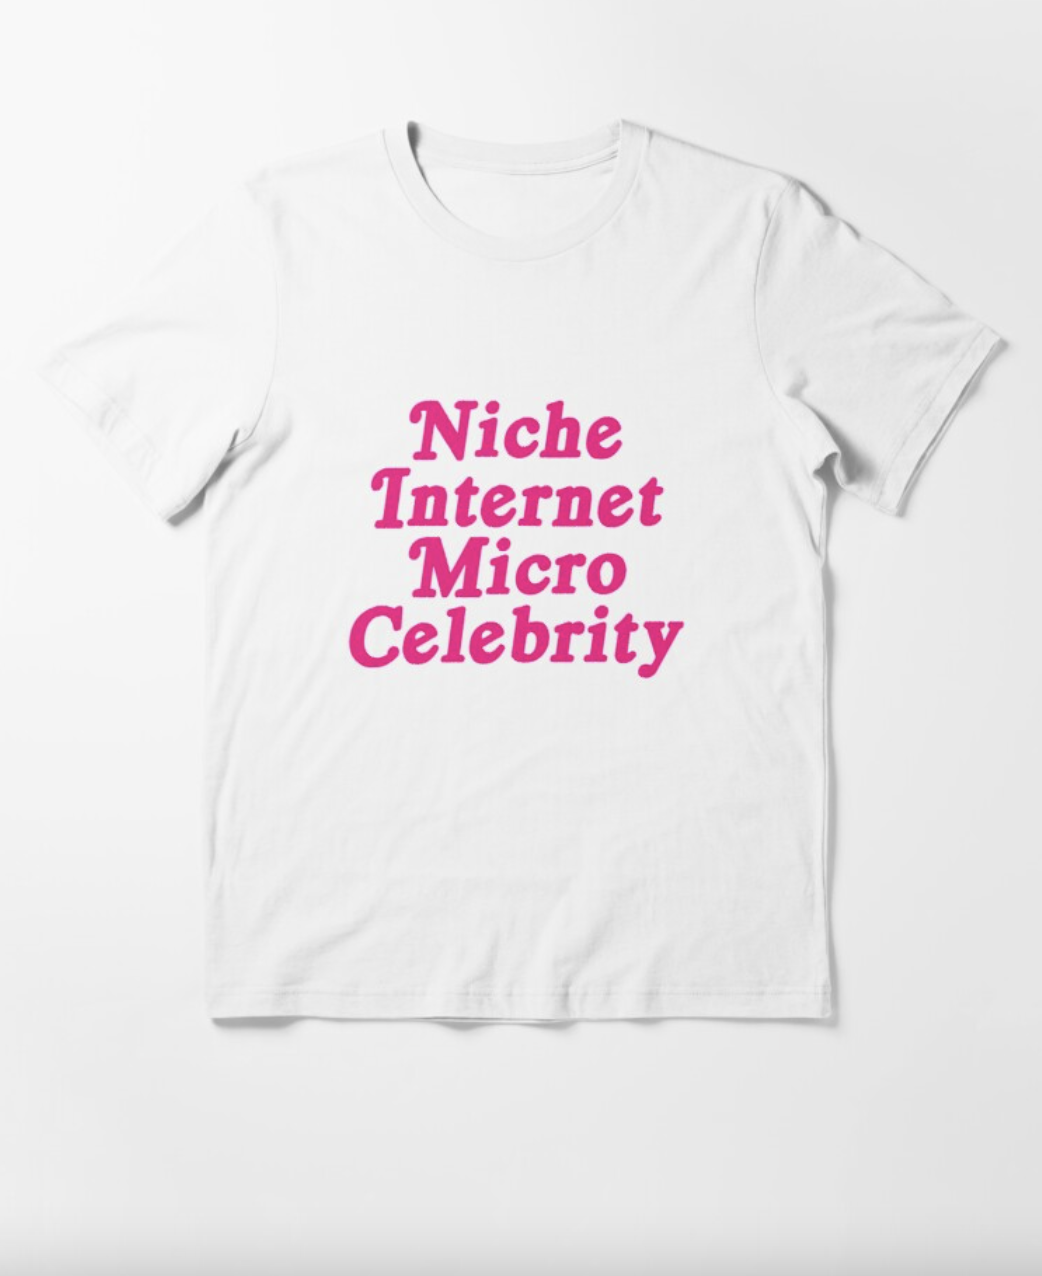 Niche Internet Micro Celebrity T-Shirt